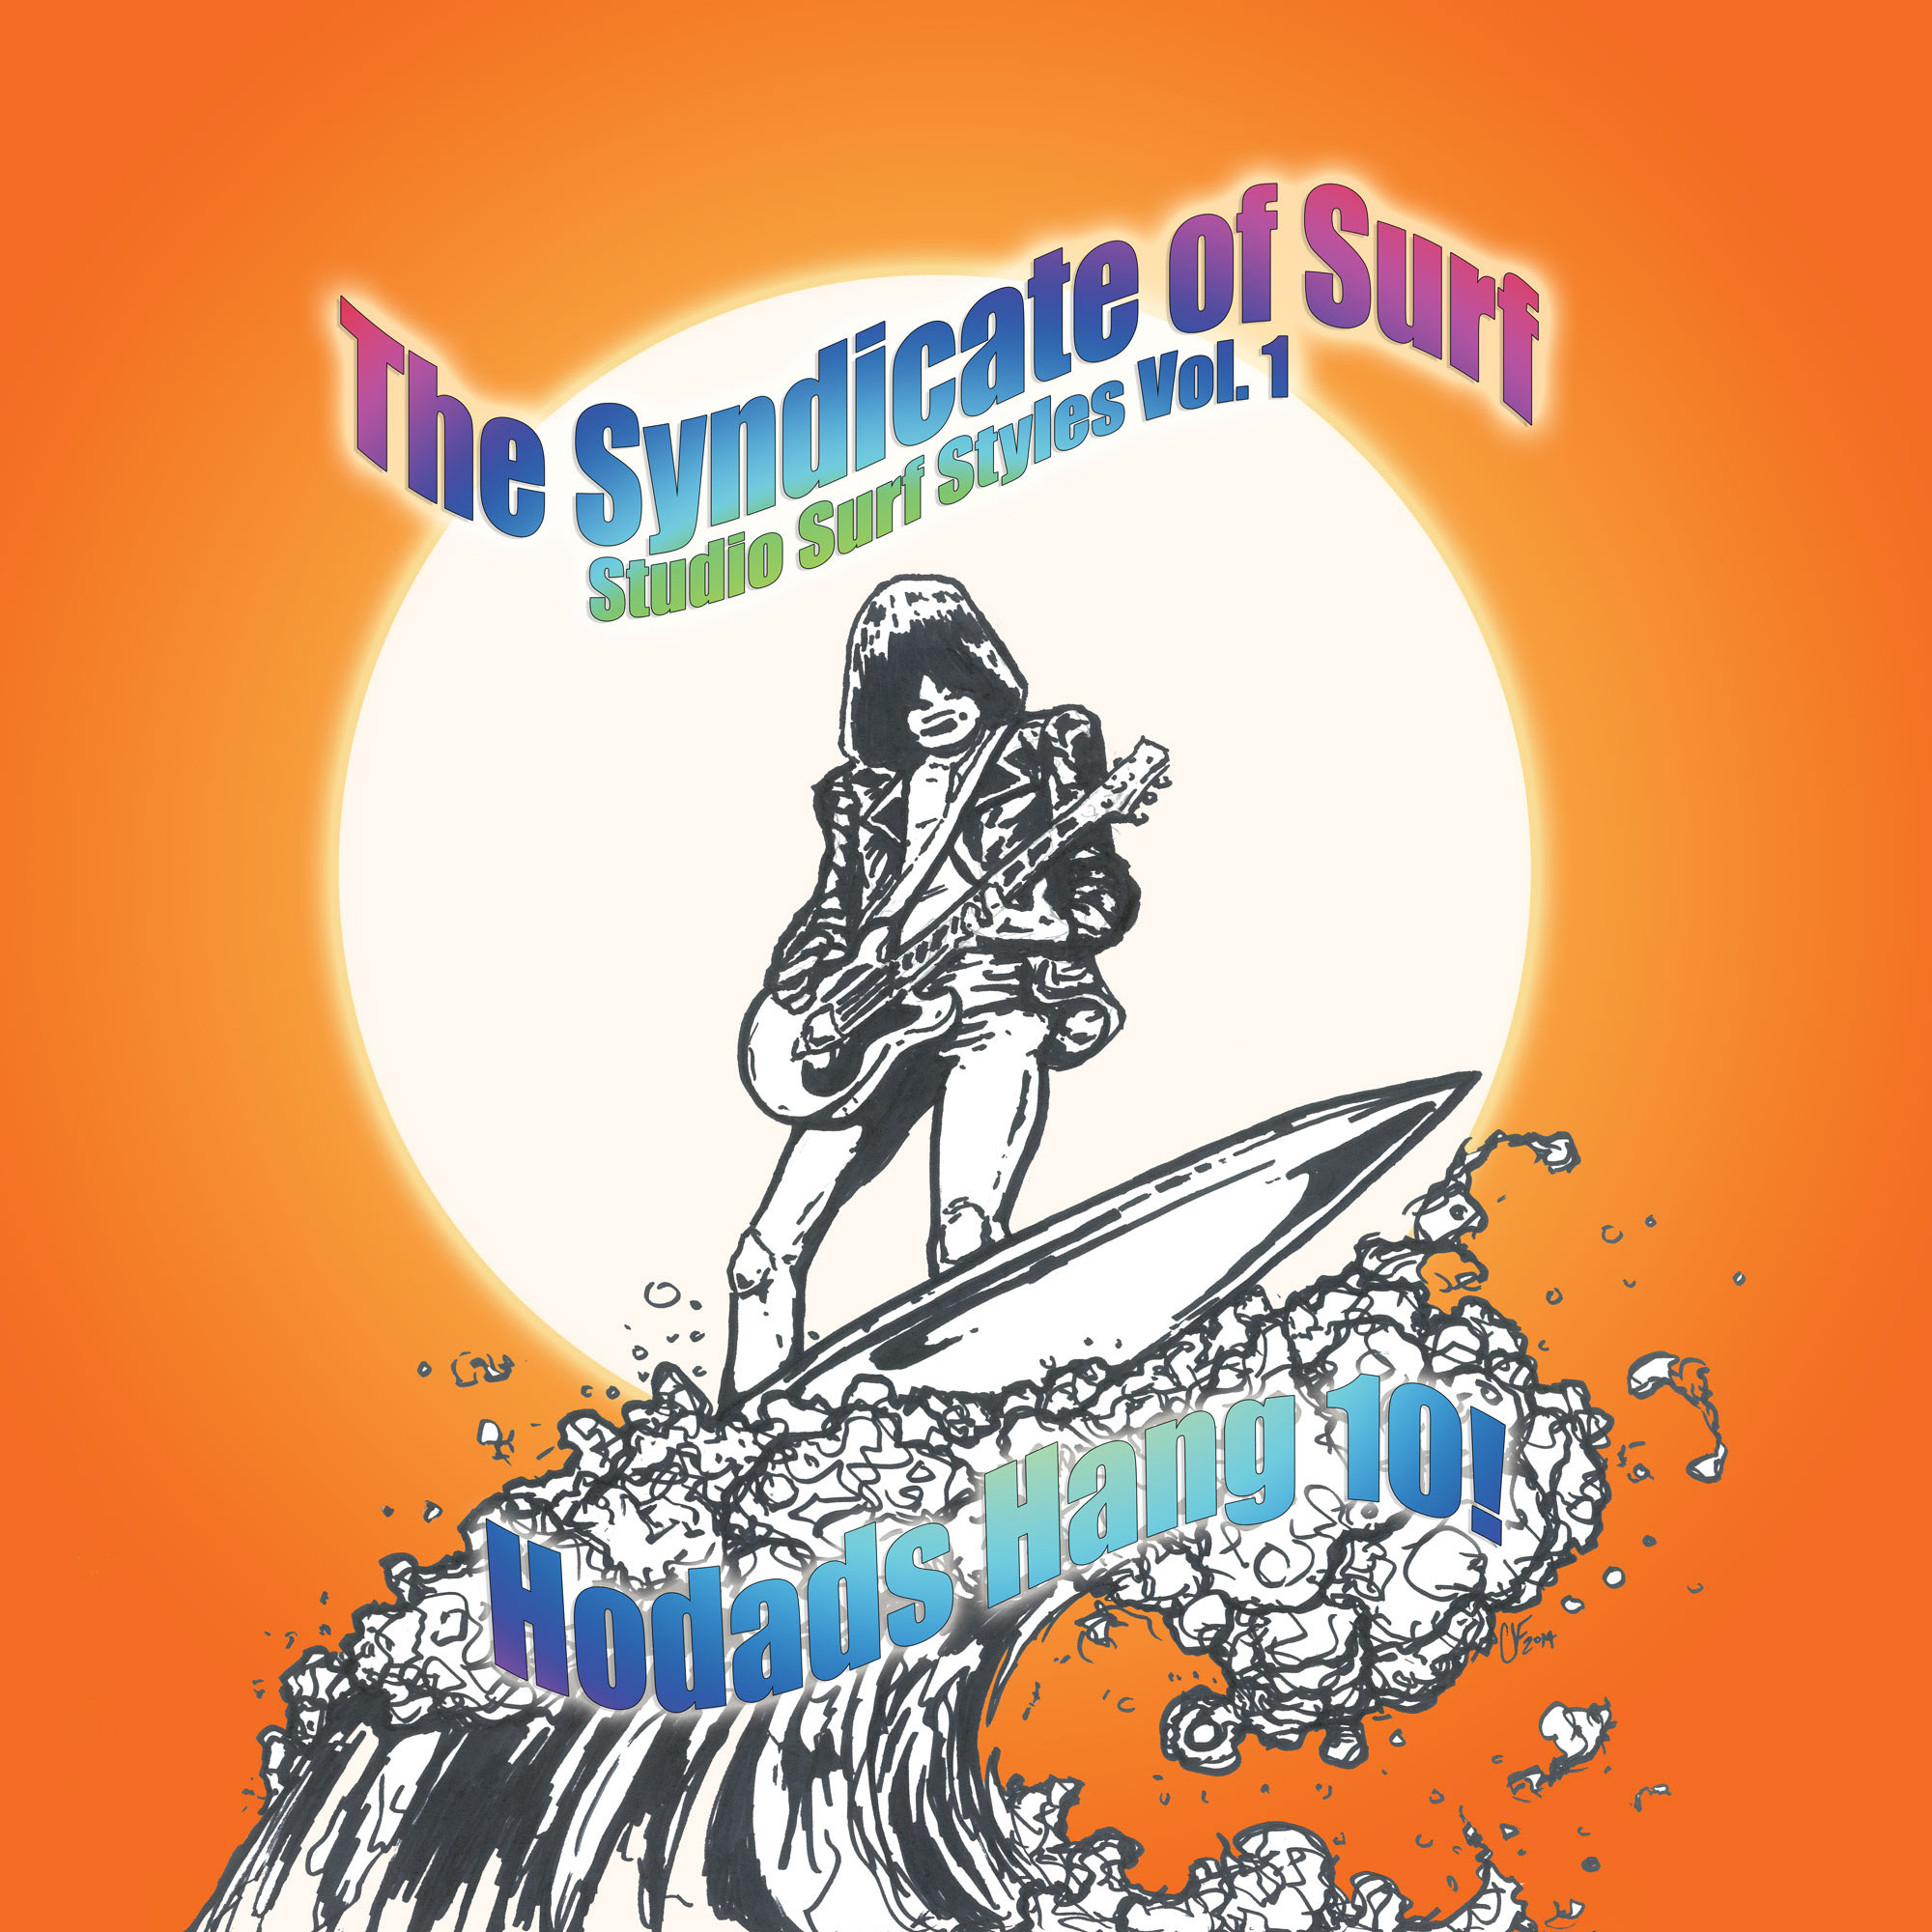 Studio Surf Styles Vol. 1 Hodads Hang 10!